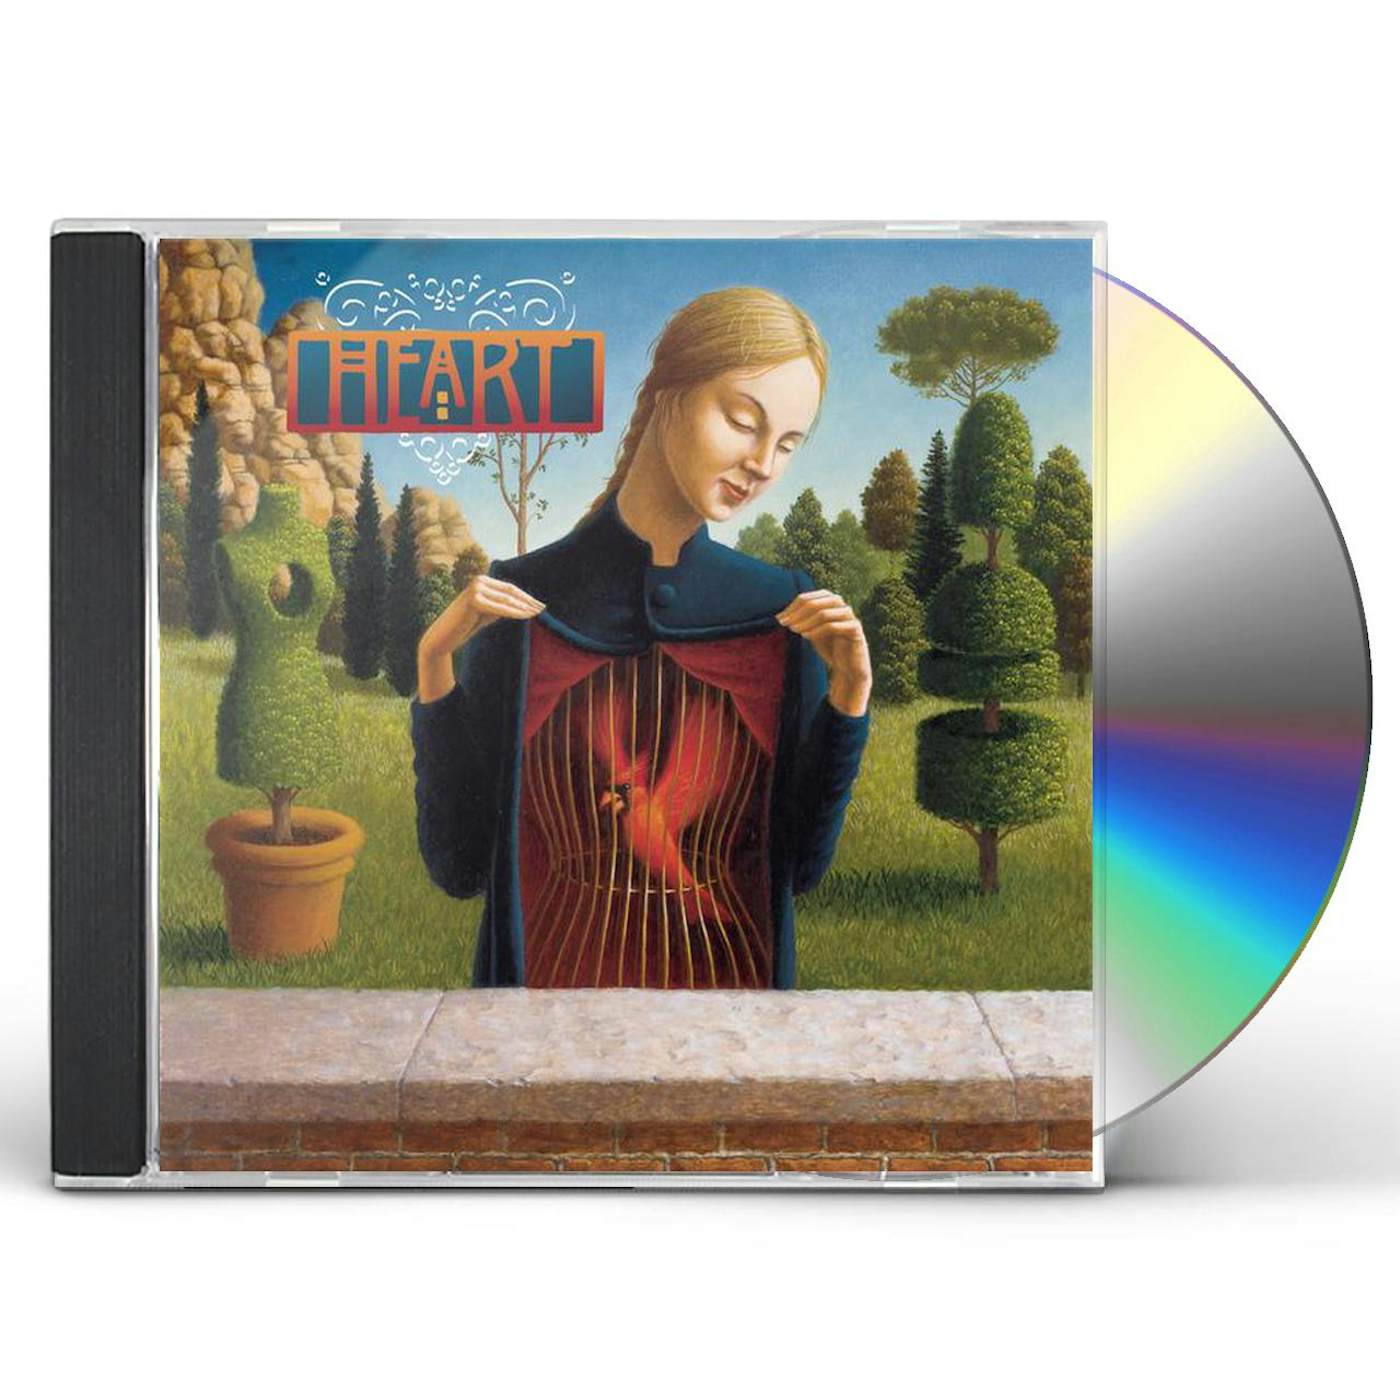 Heart GREATEST HITS CD